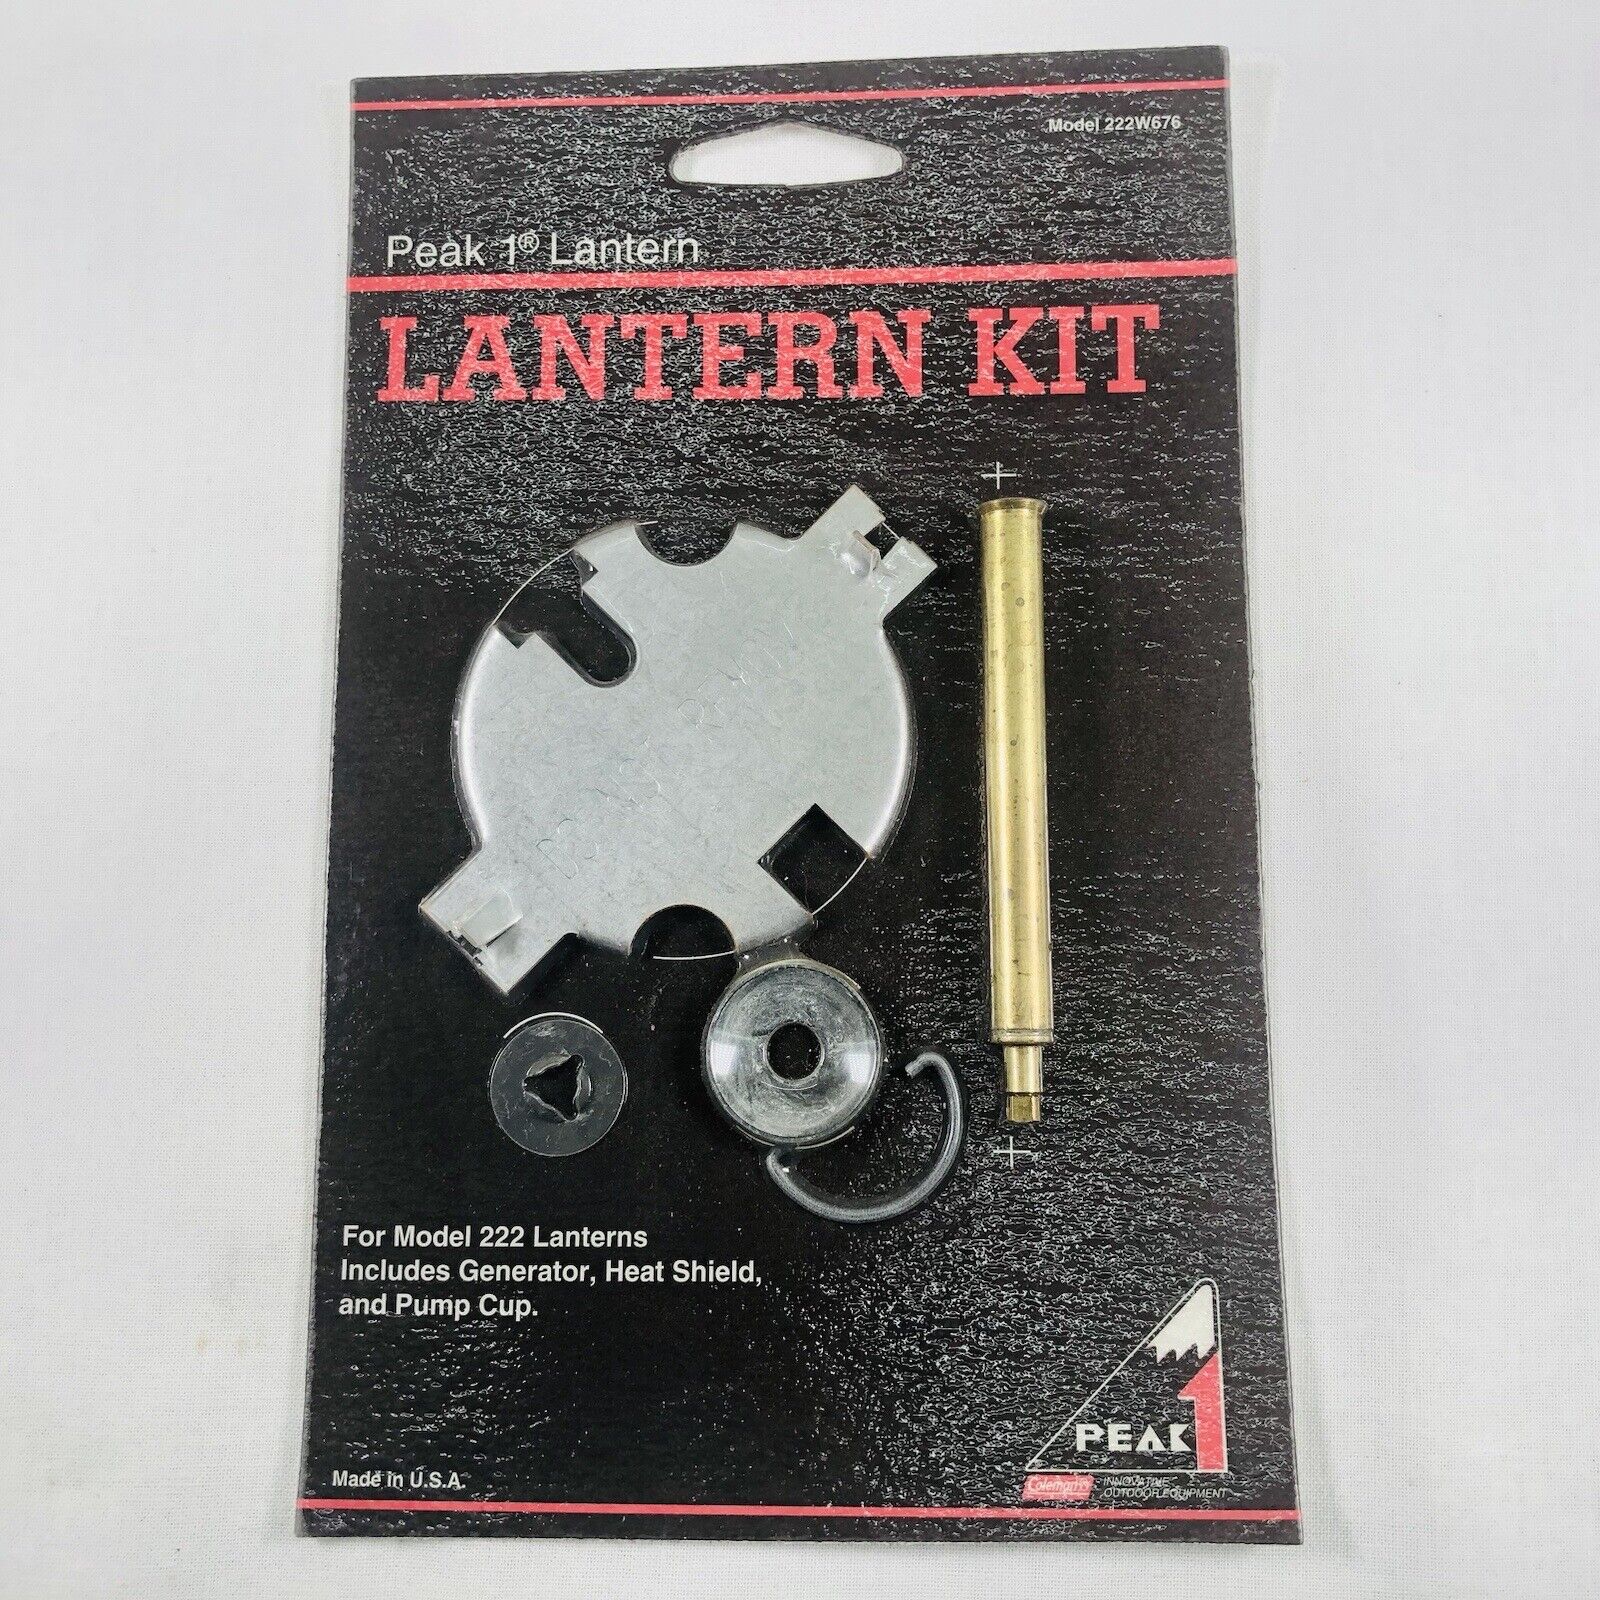 NEW 222W676 Coleman Lantern Maintenance Kit w/ Generator for 222 226 229  3022